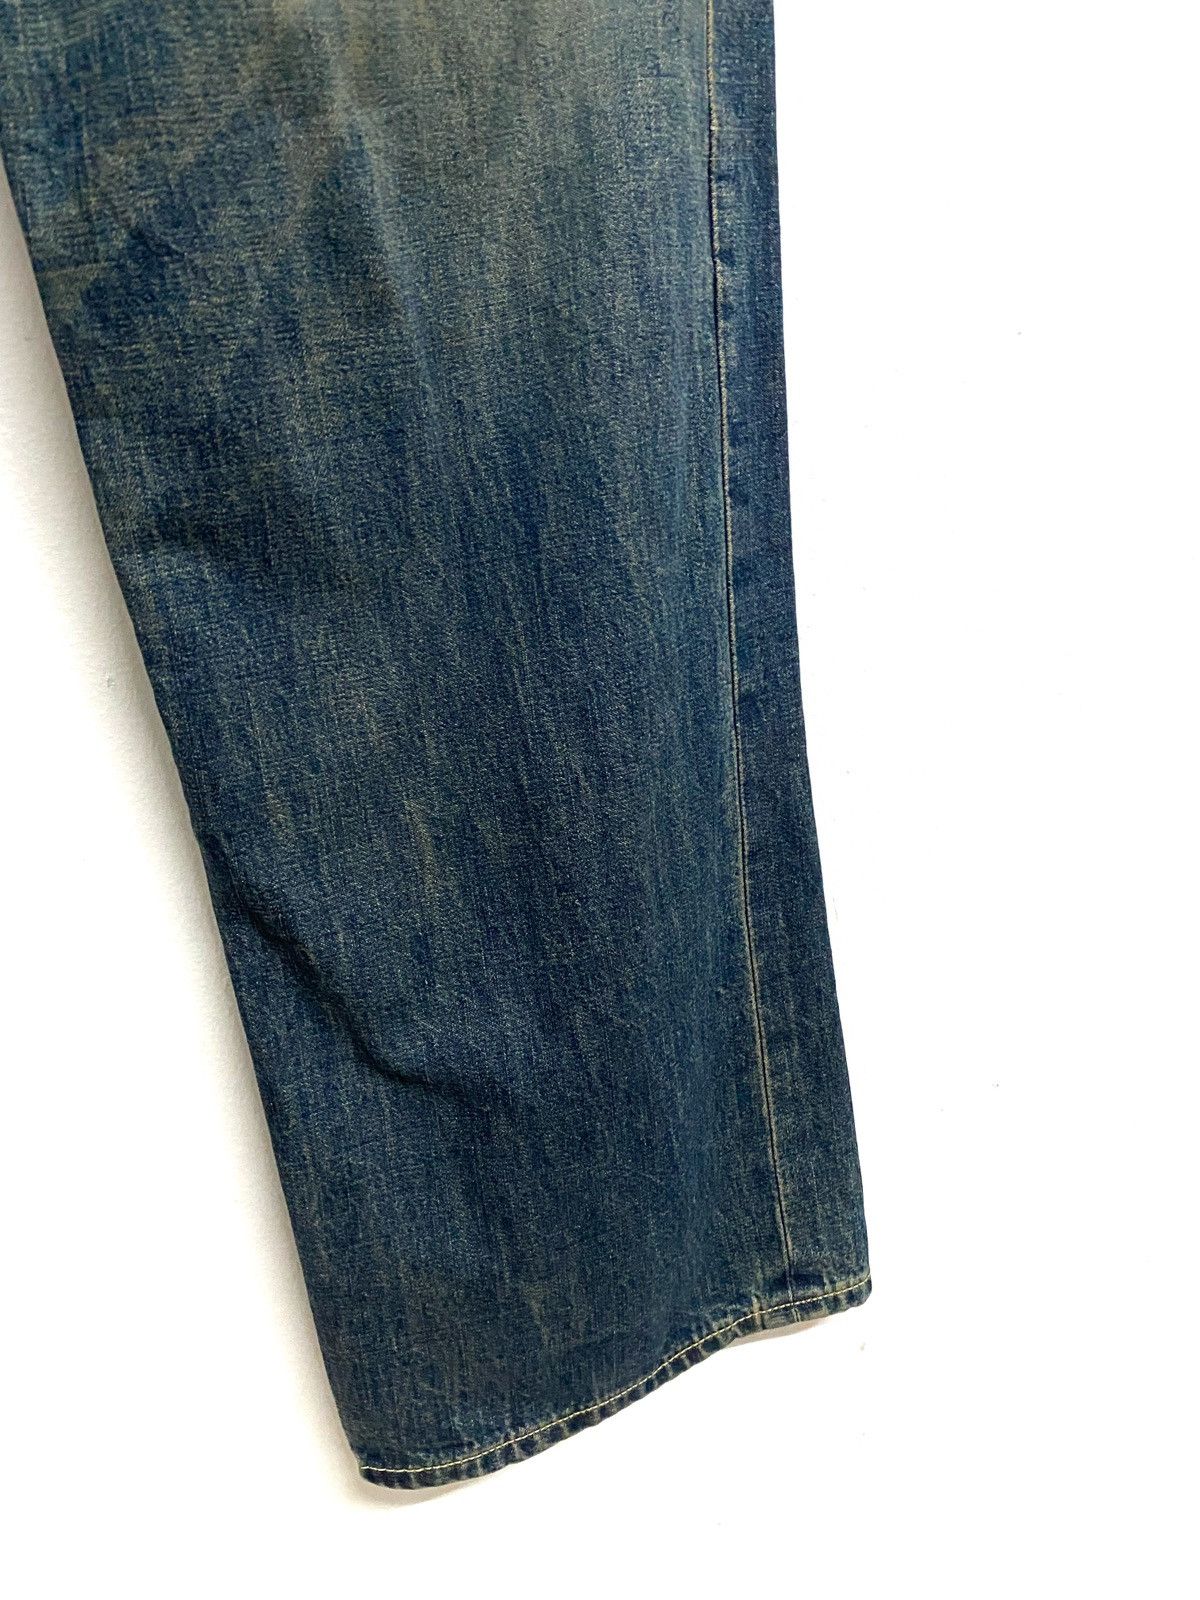 Goodenough - Good Enough Resonate Selvedge Denim Jeans - 5